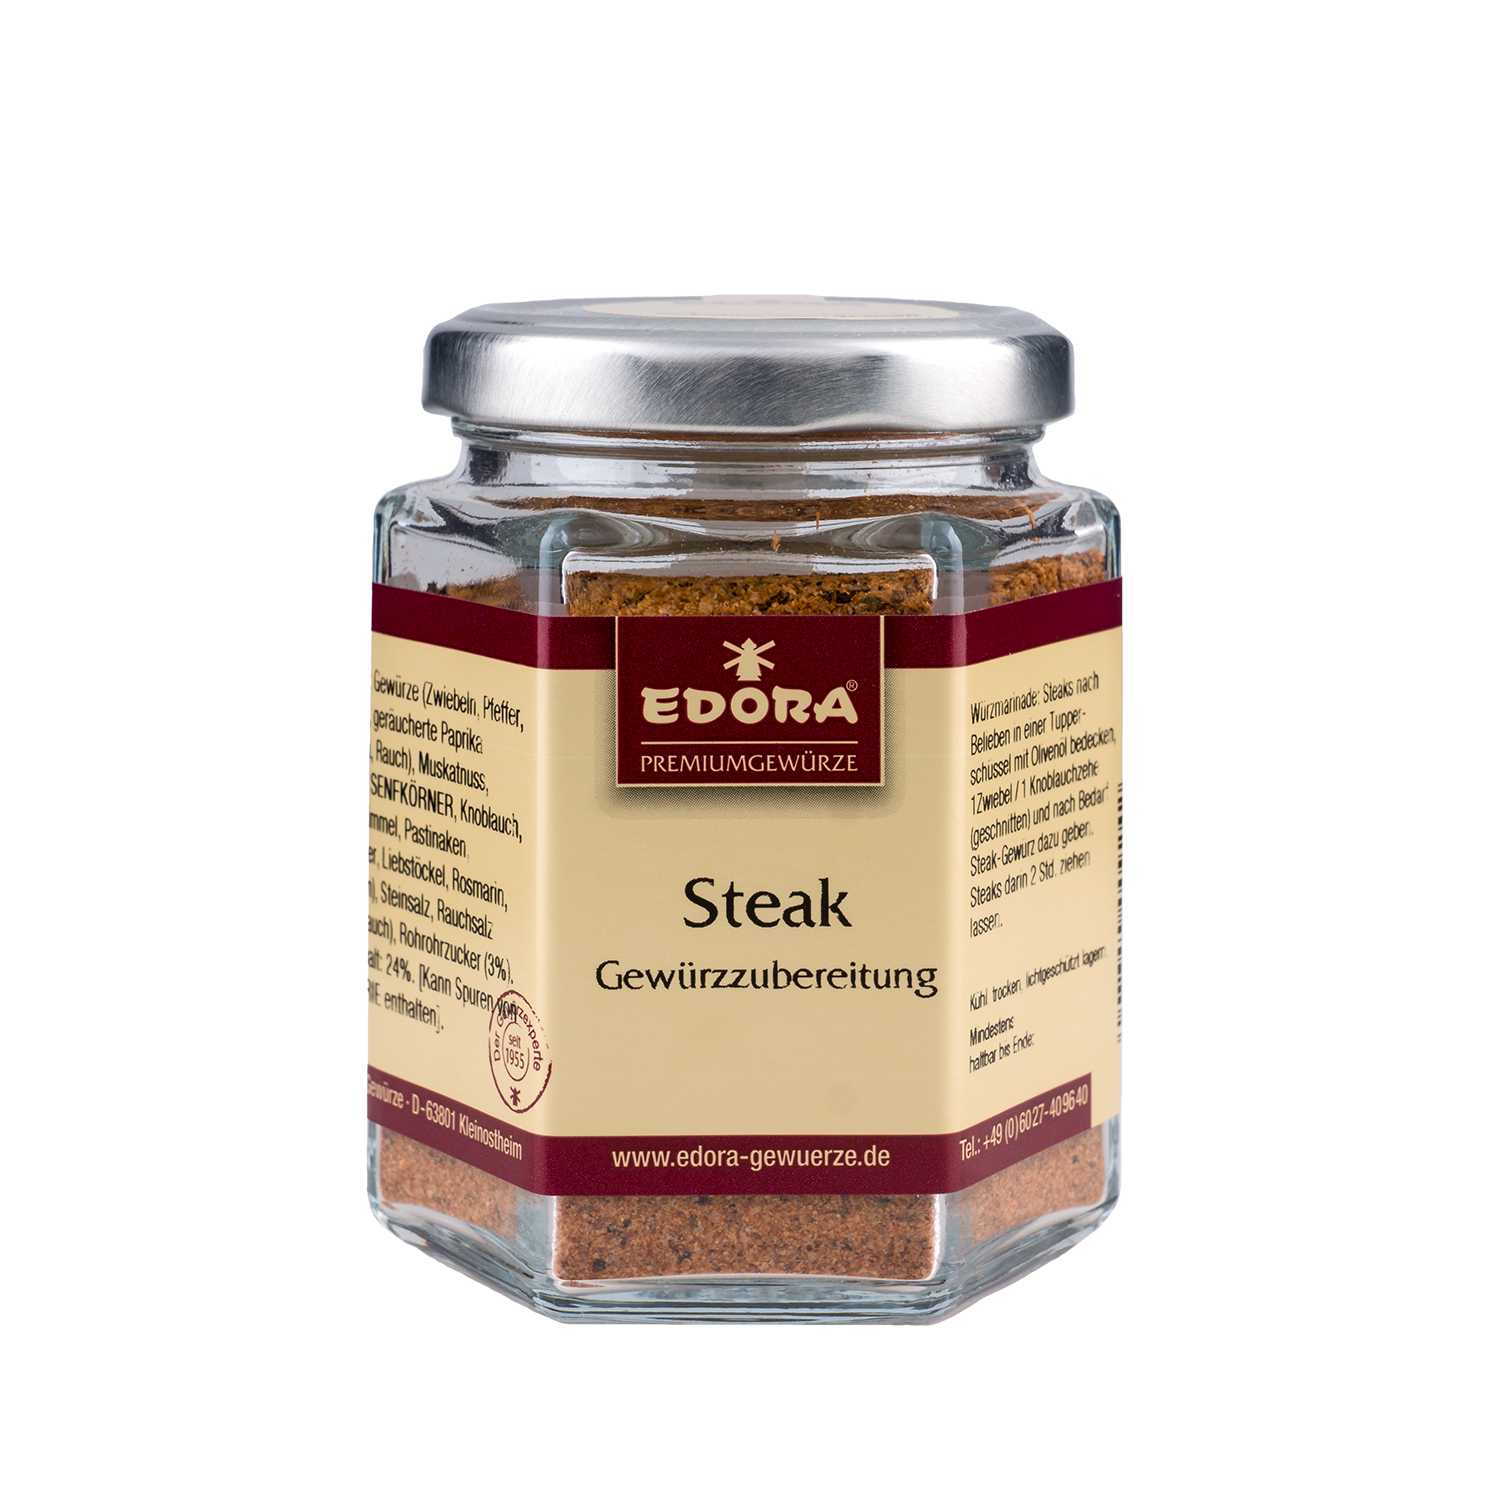 Edora Steak Gewürzzubereitungng 95Gr 